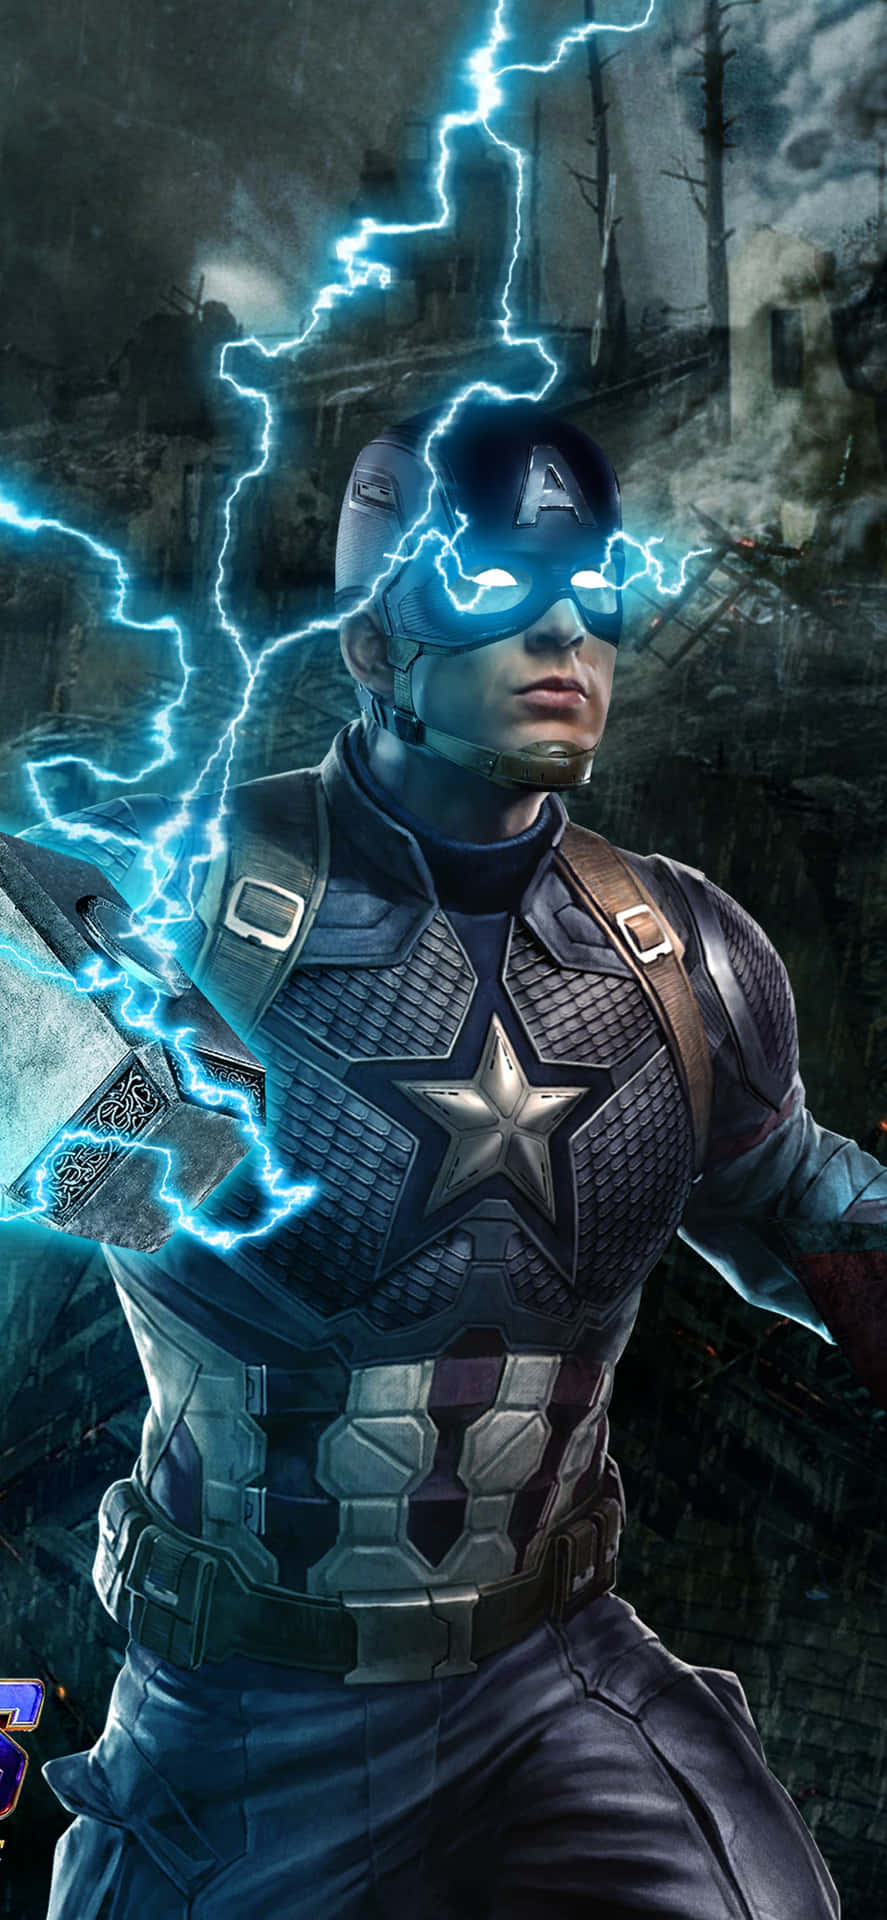 Dieavengers Versammeln Sich - Captain America In Endgame. Wallpaper